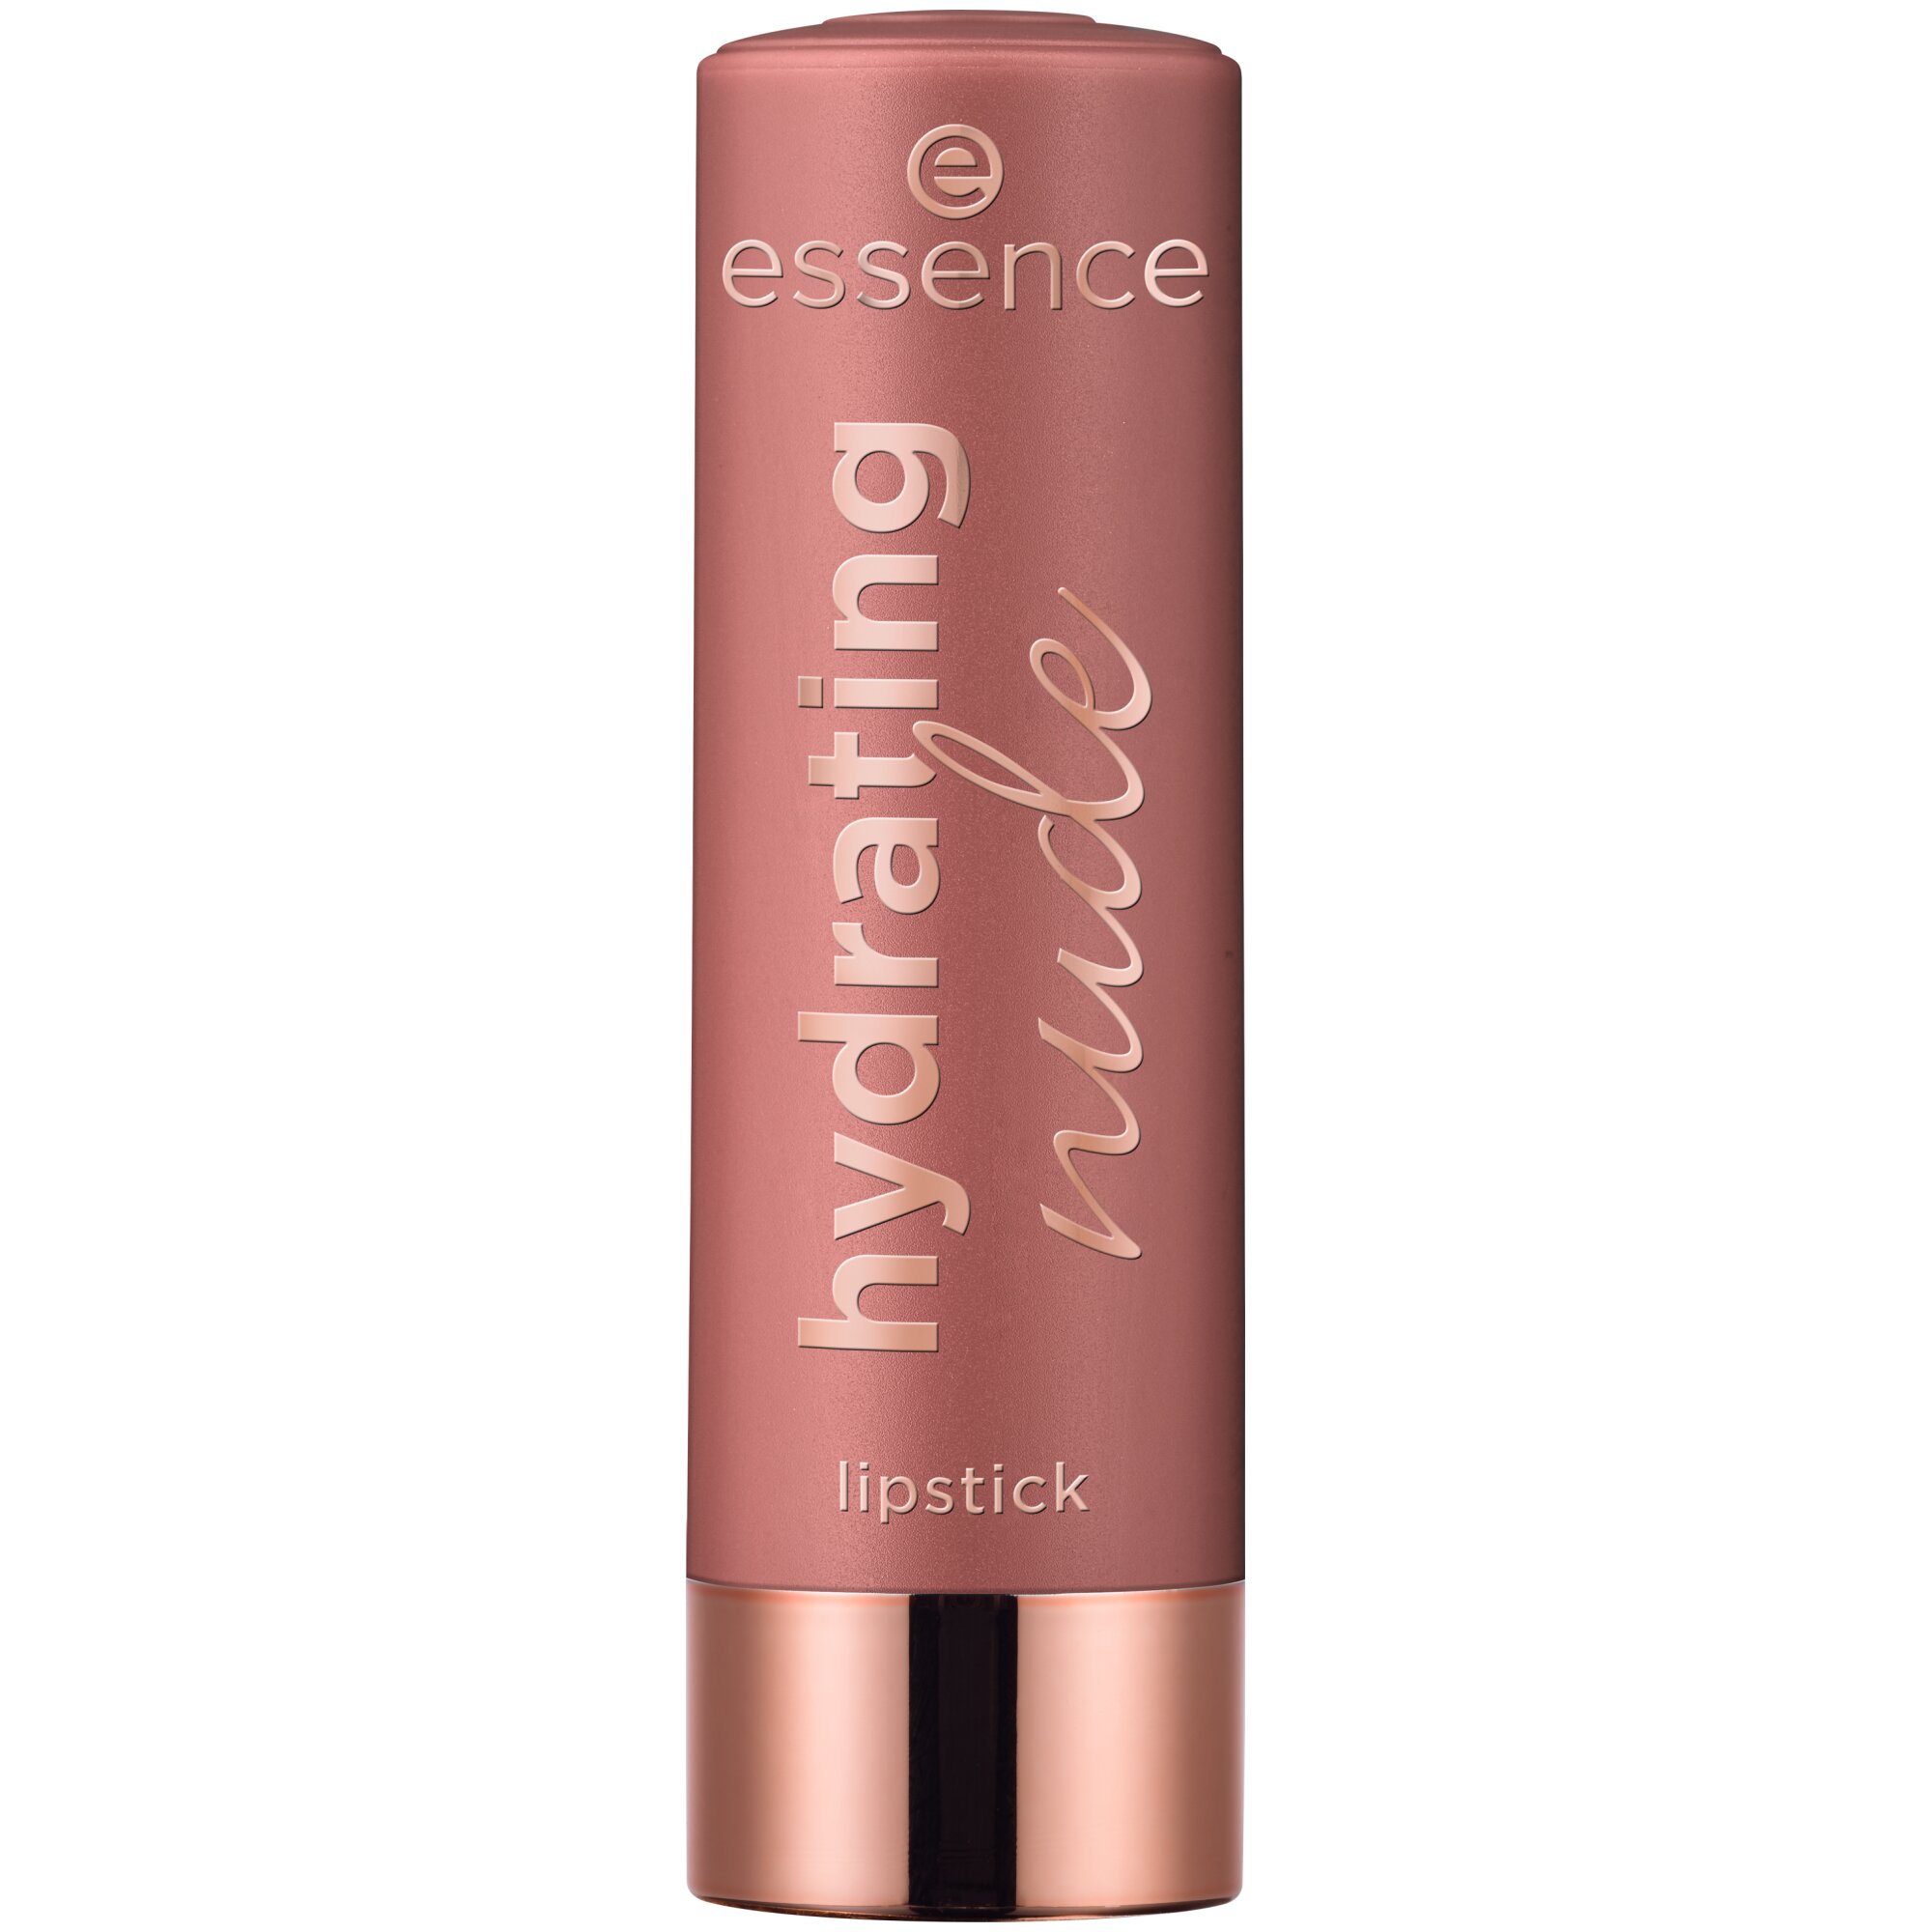 Ruj hidratant Hydrating Nude Lipstick, 302 - Heavenly, 3.5 g, Essence